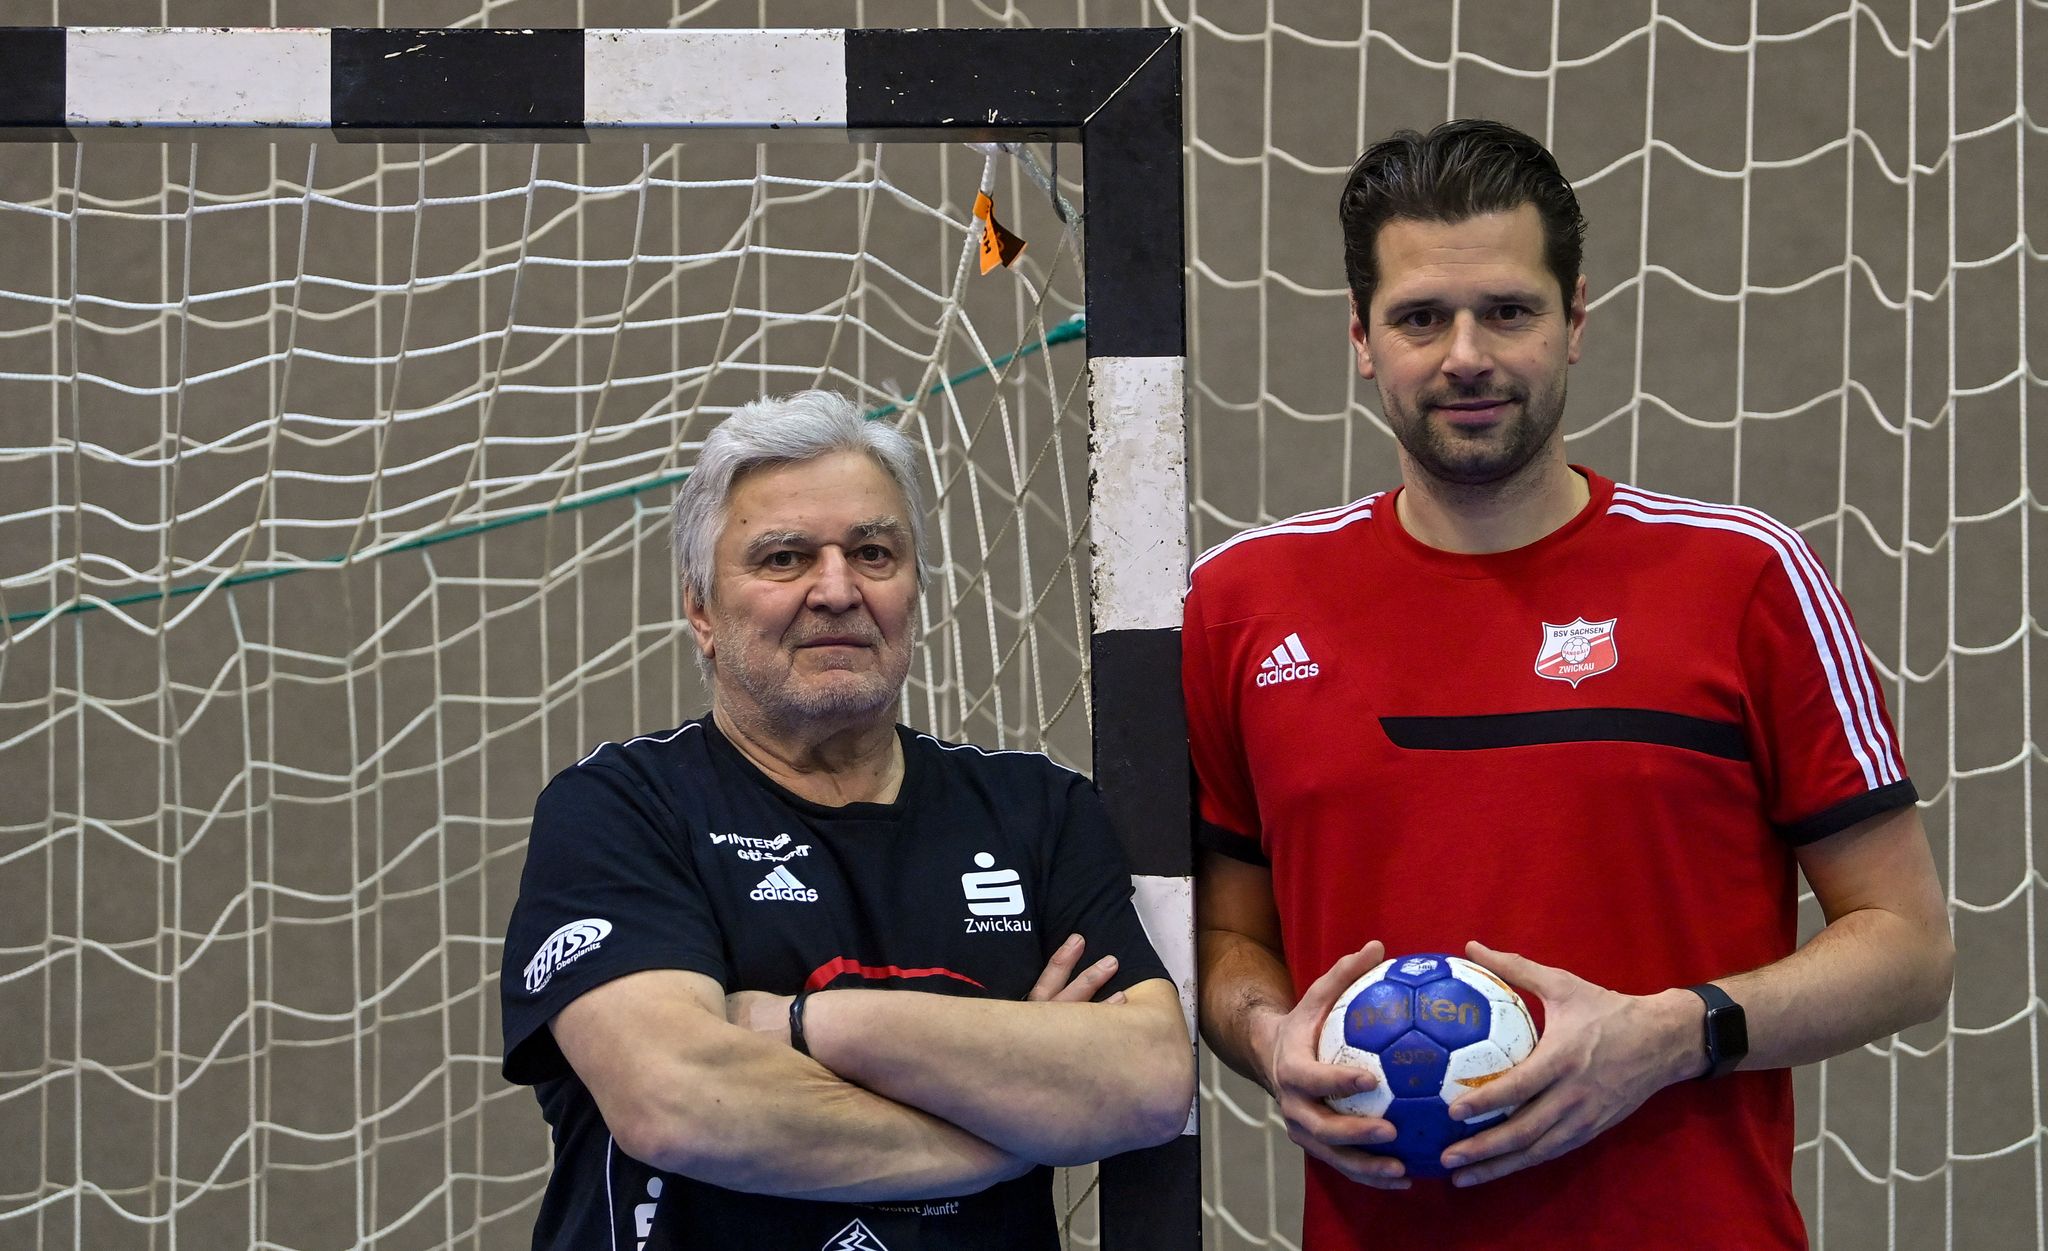 Dietmar Schmidt (l) und Norman Rentsch (r) 
Die Zwickauer Handballerinnen haben groe Saisonziele. Hendrik Schmidt/dpa-Zentralbild/dpa